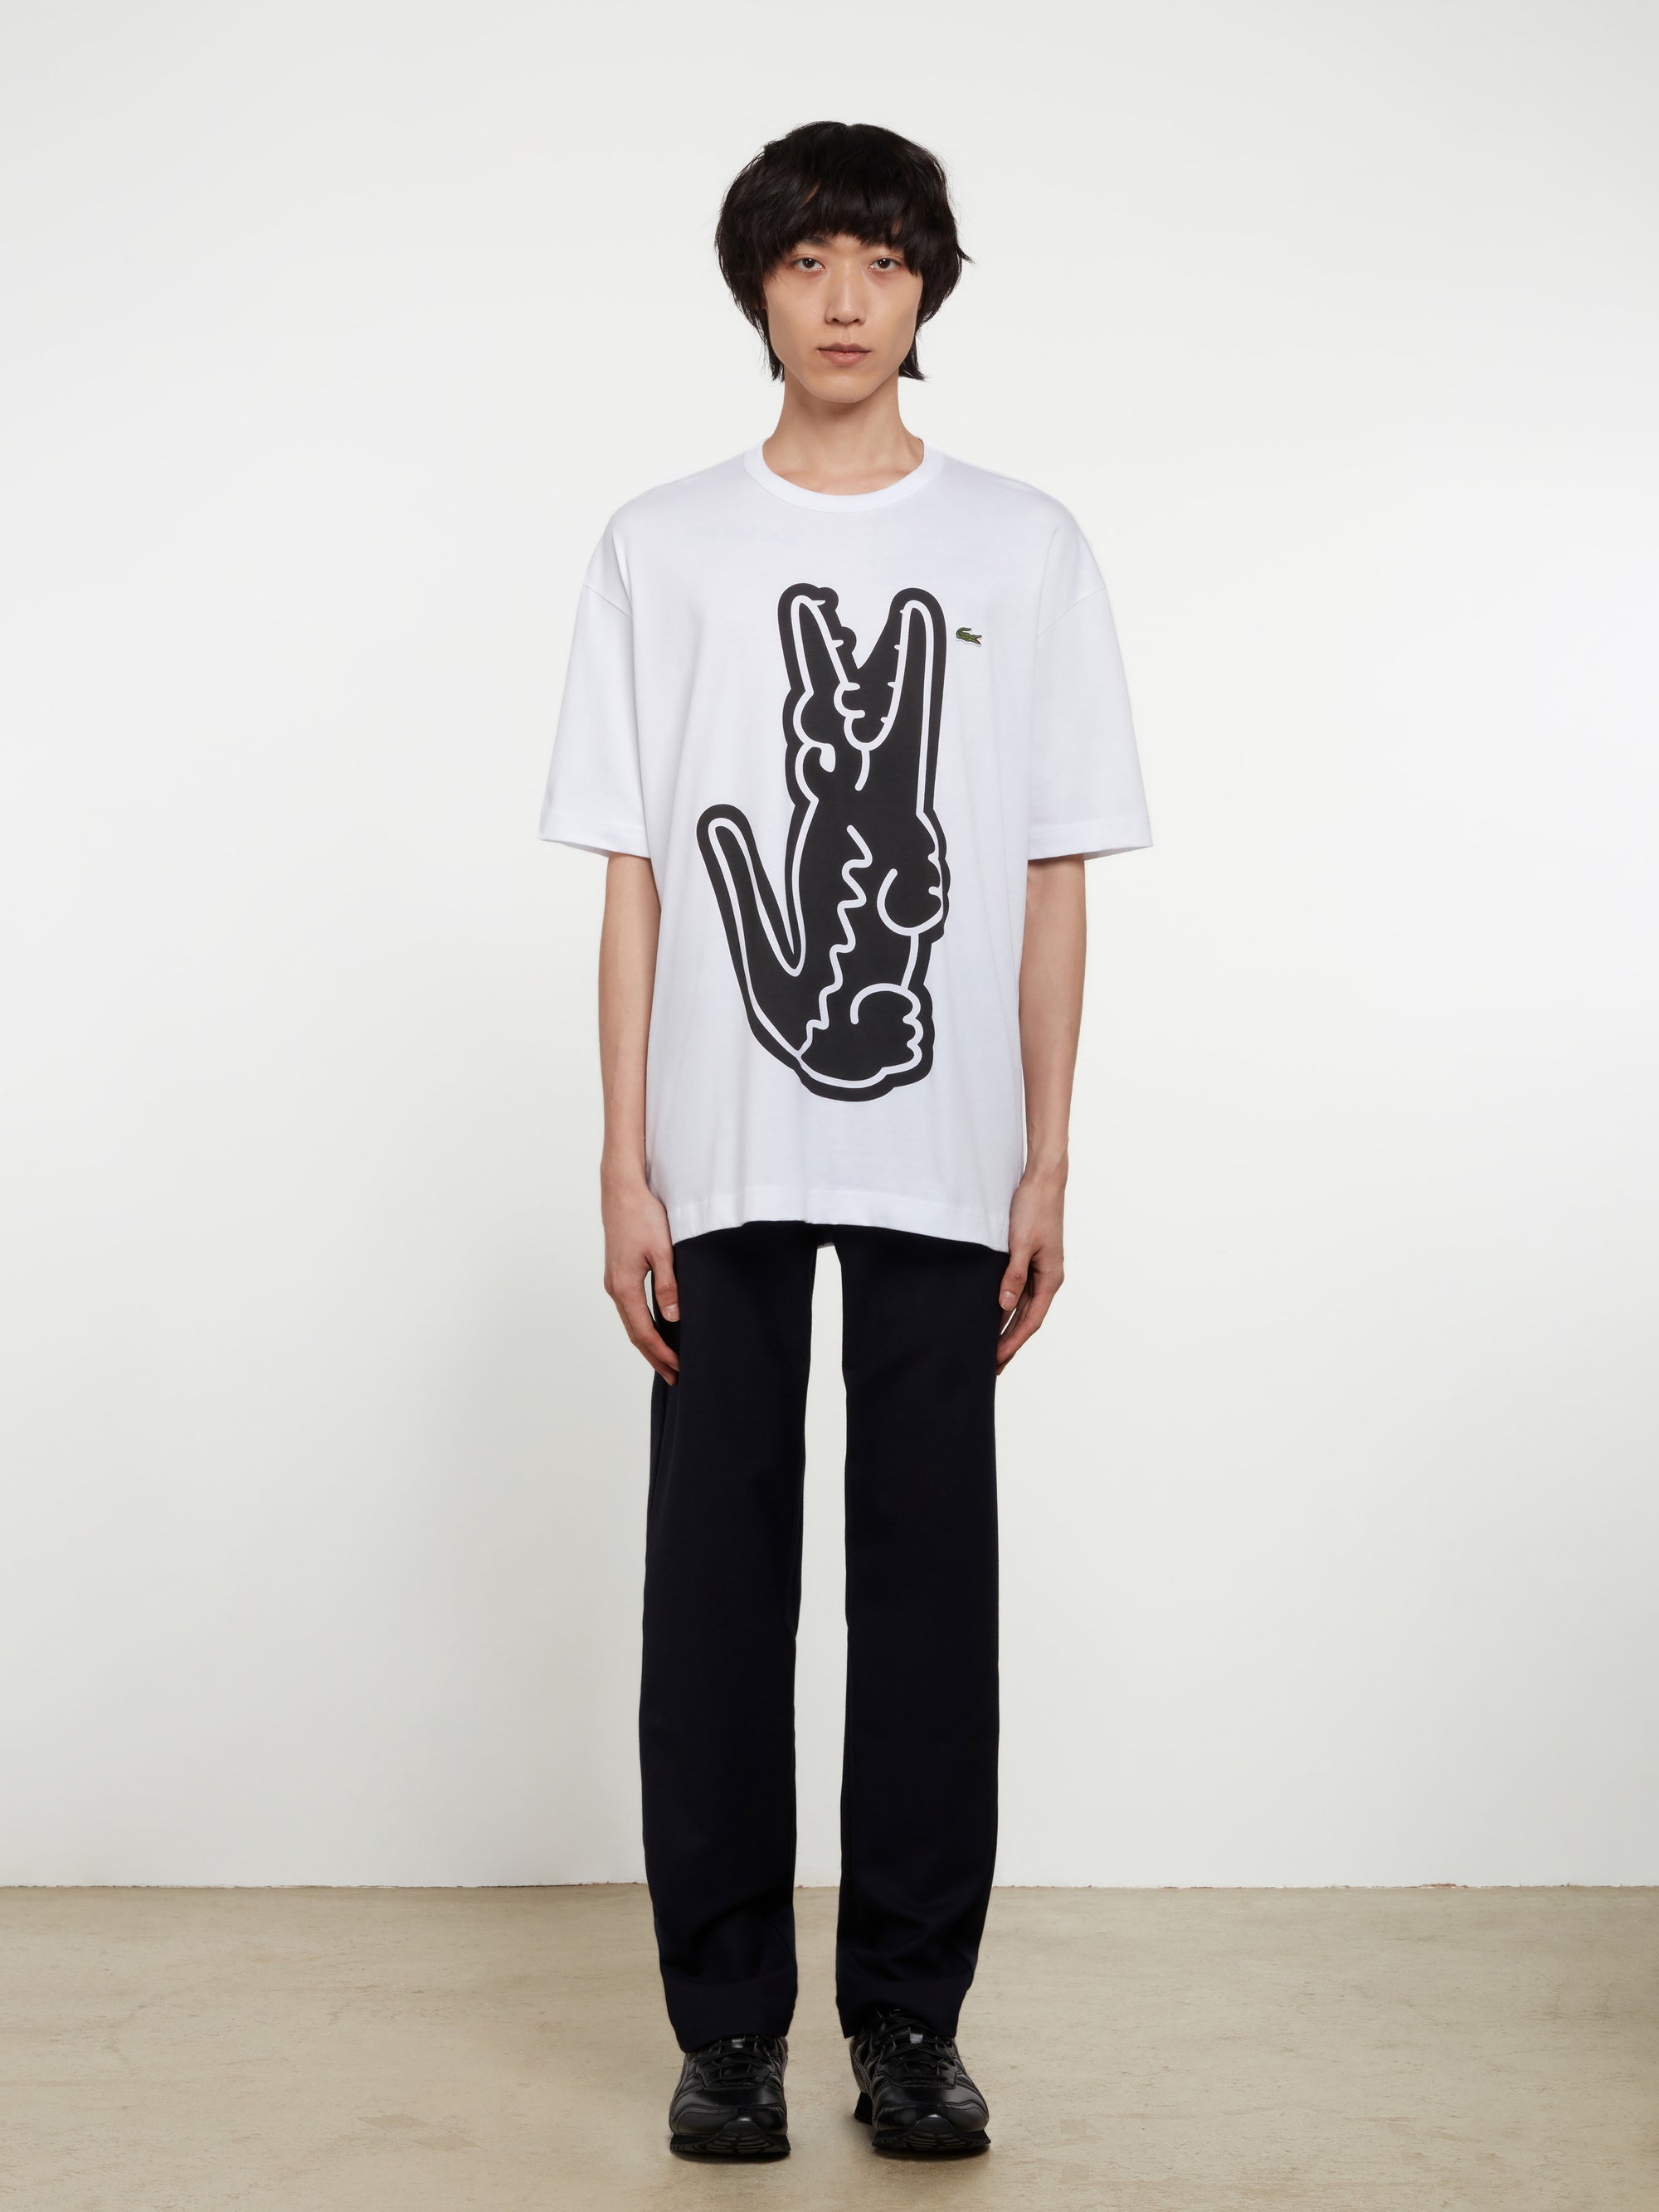 CDG Shirt - Lacoste Men’s Printed T-Shirt - (White) view 4